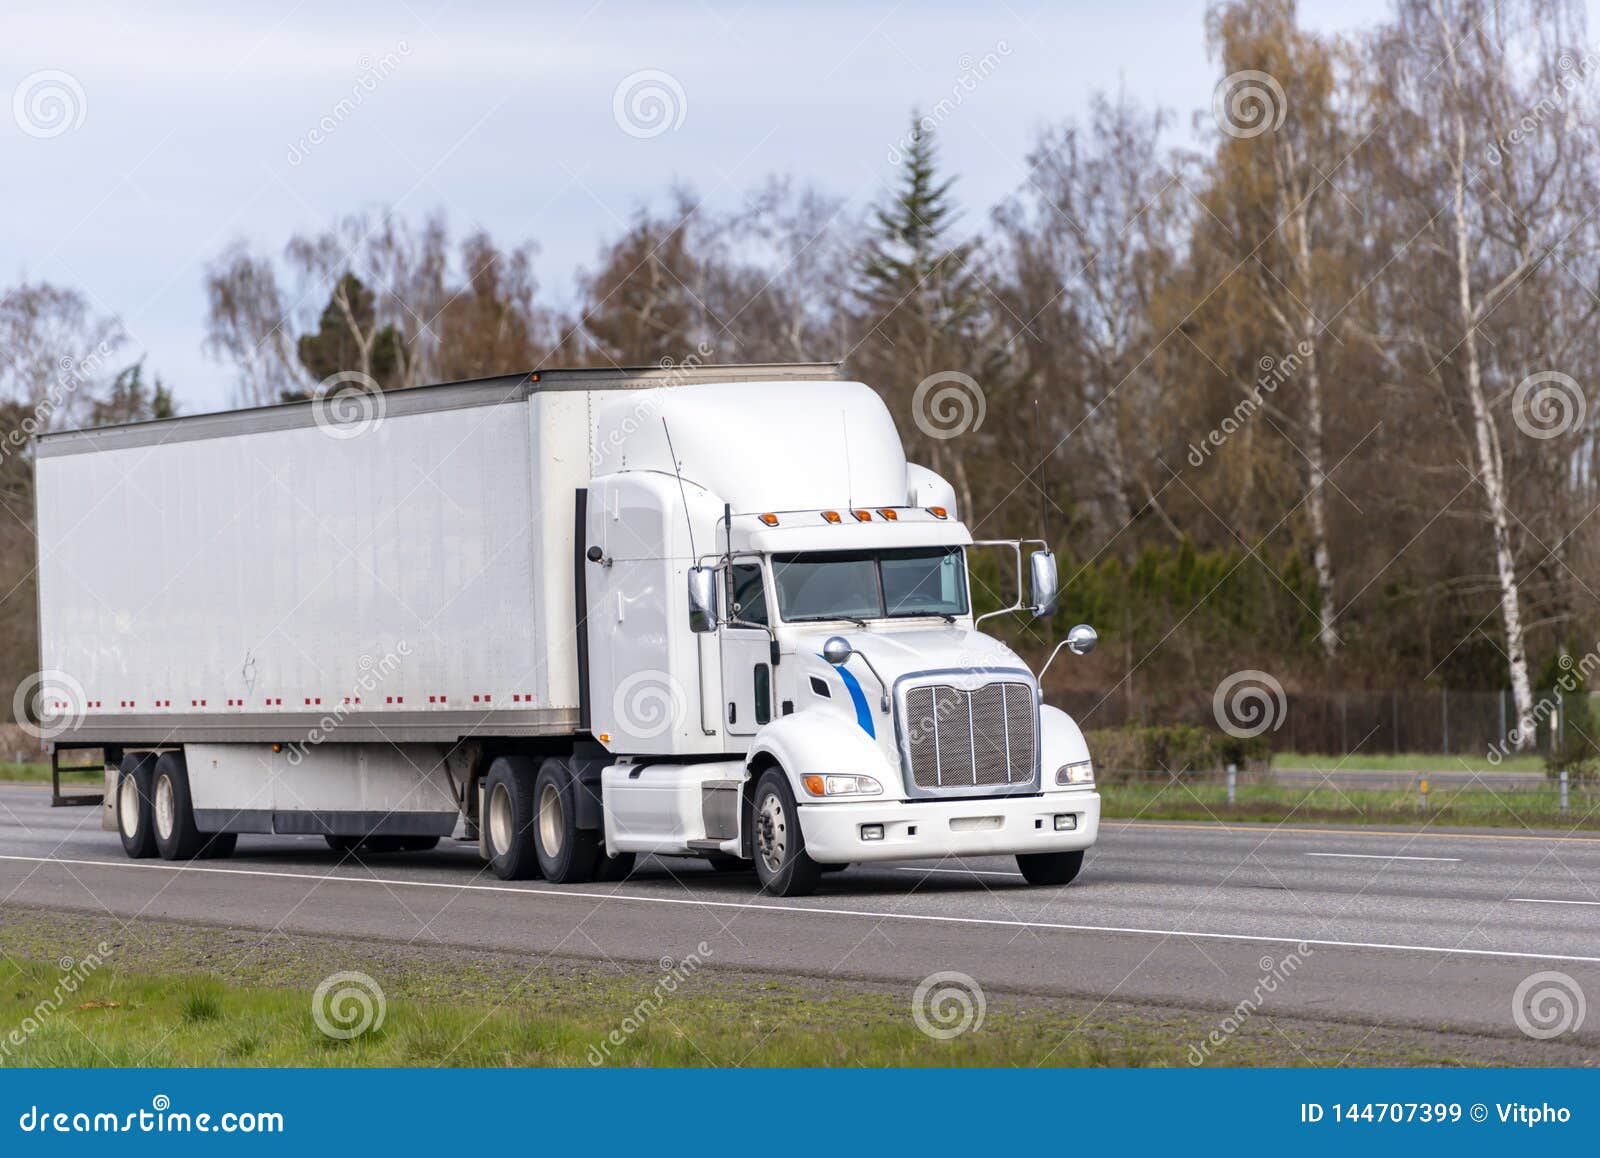 long haul white big rig semi truck transporting goods in dry van semi trailer running on straight highway road